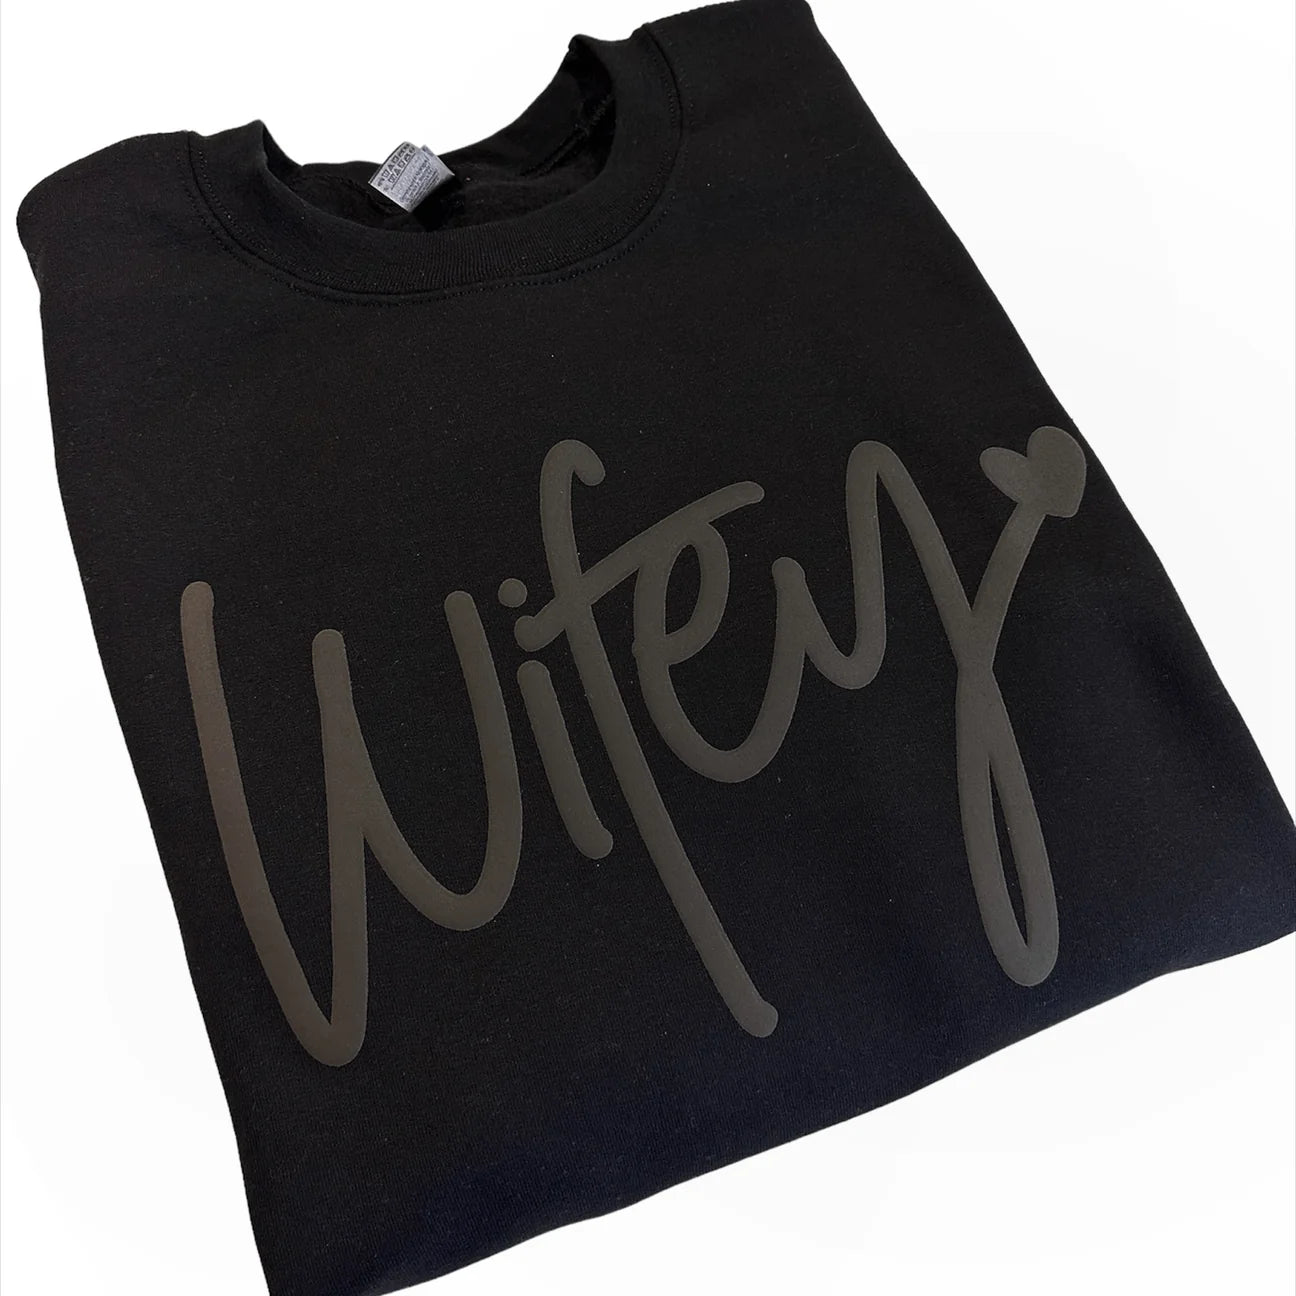 "Wifey" Sweatshirt or T-shirt - Black *Puff Ink*